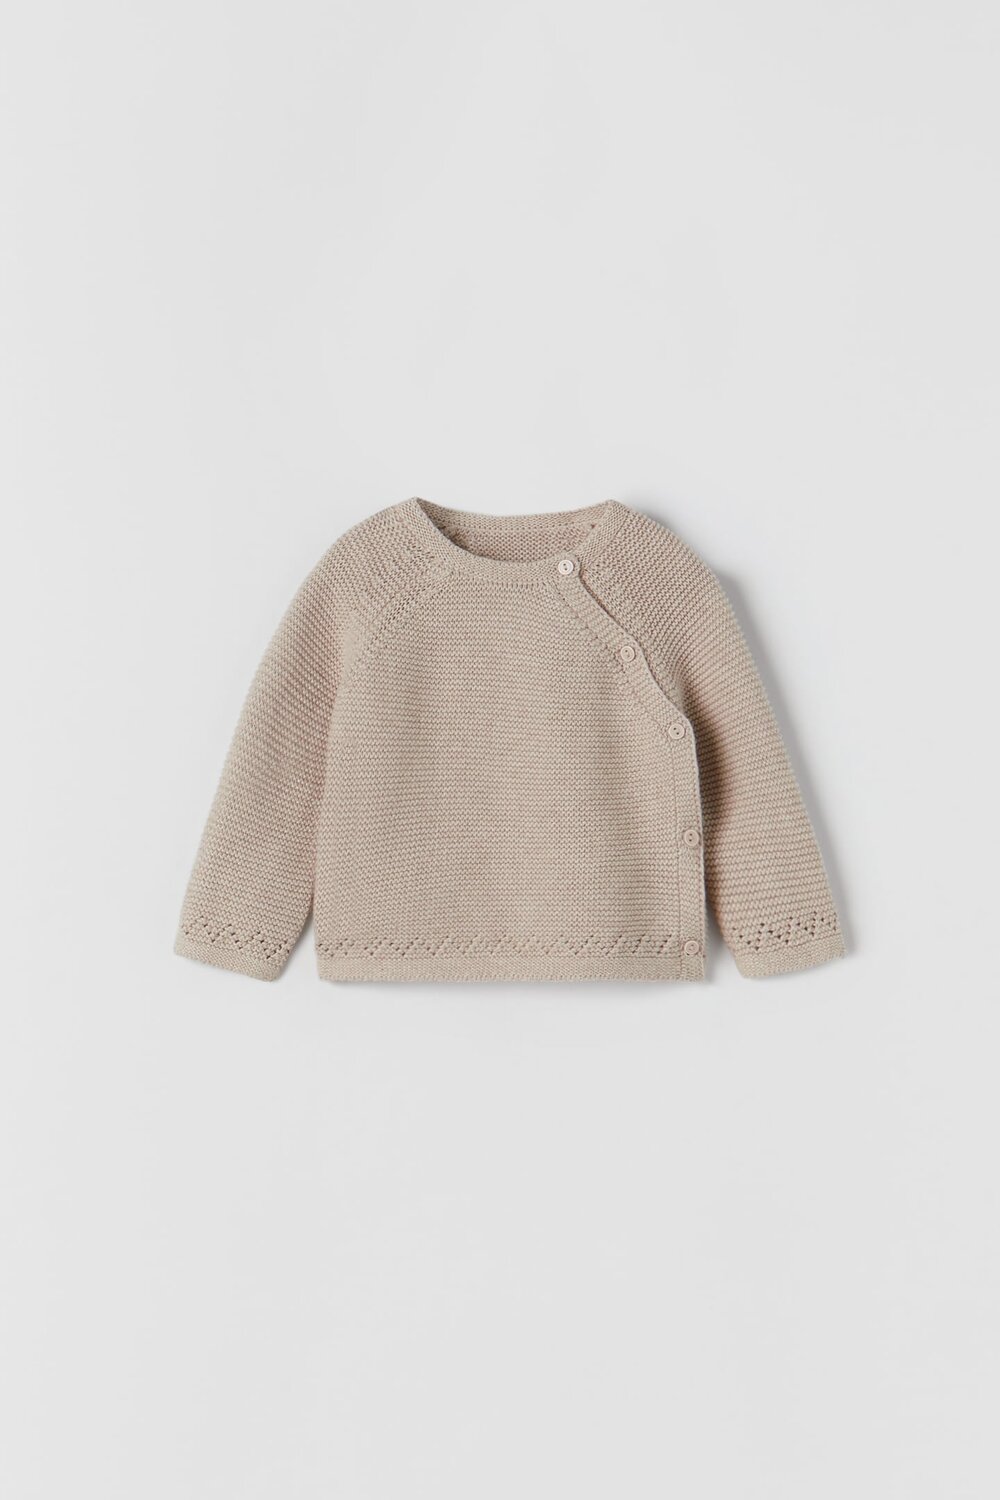 $20 | Sweater